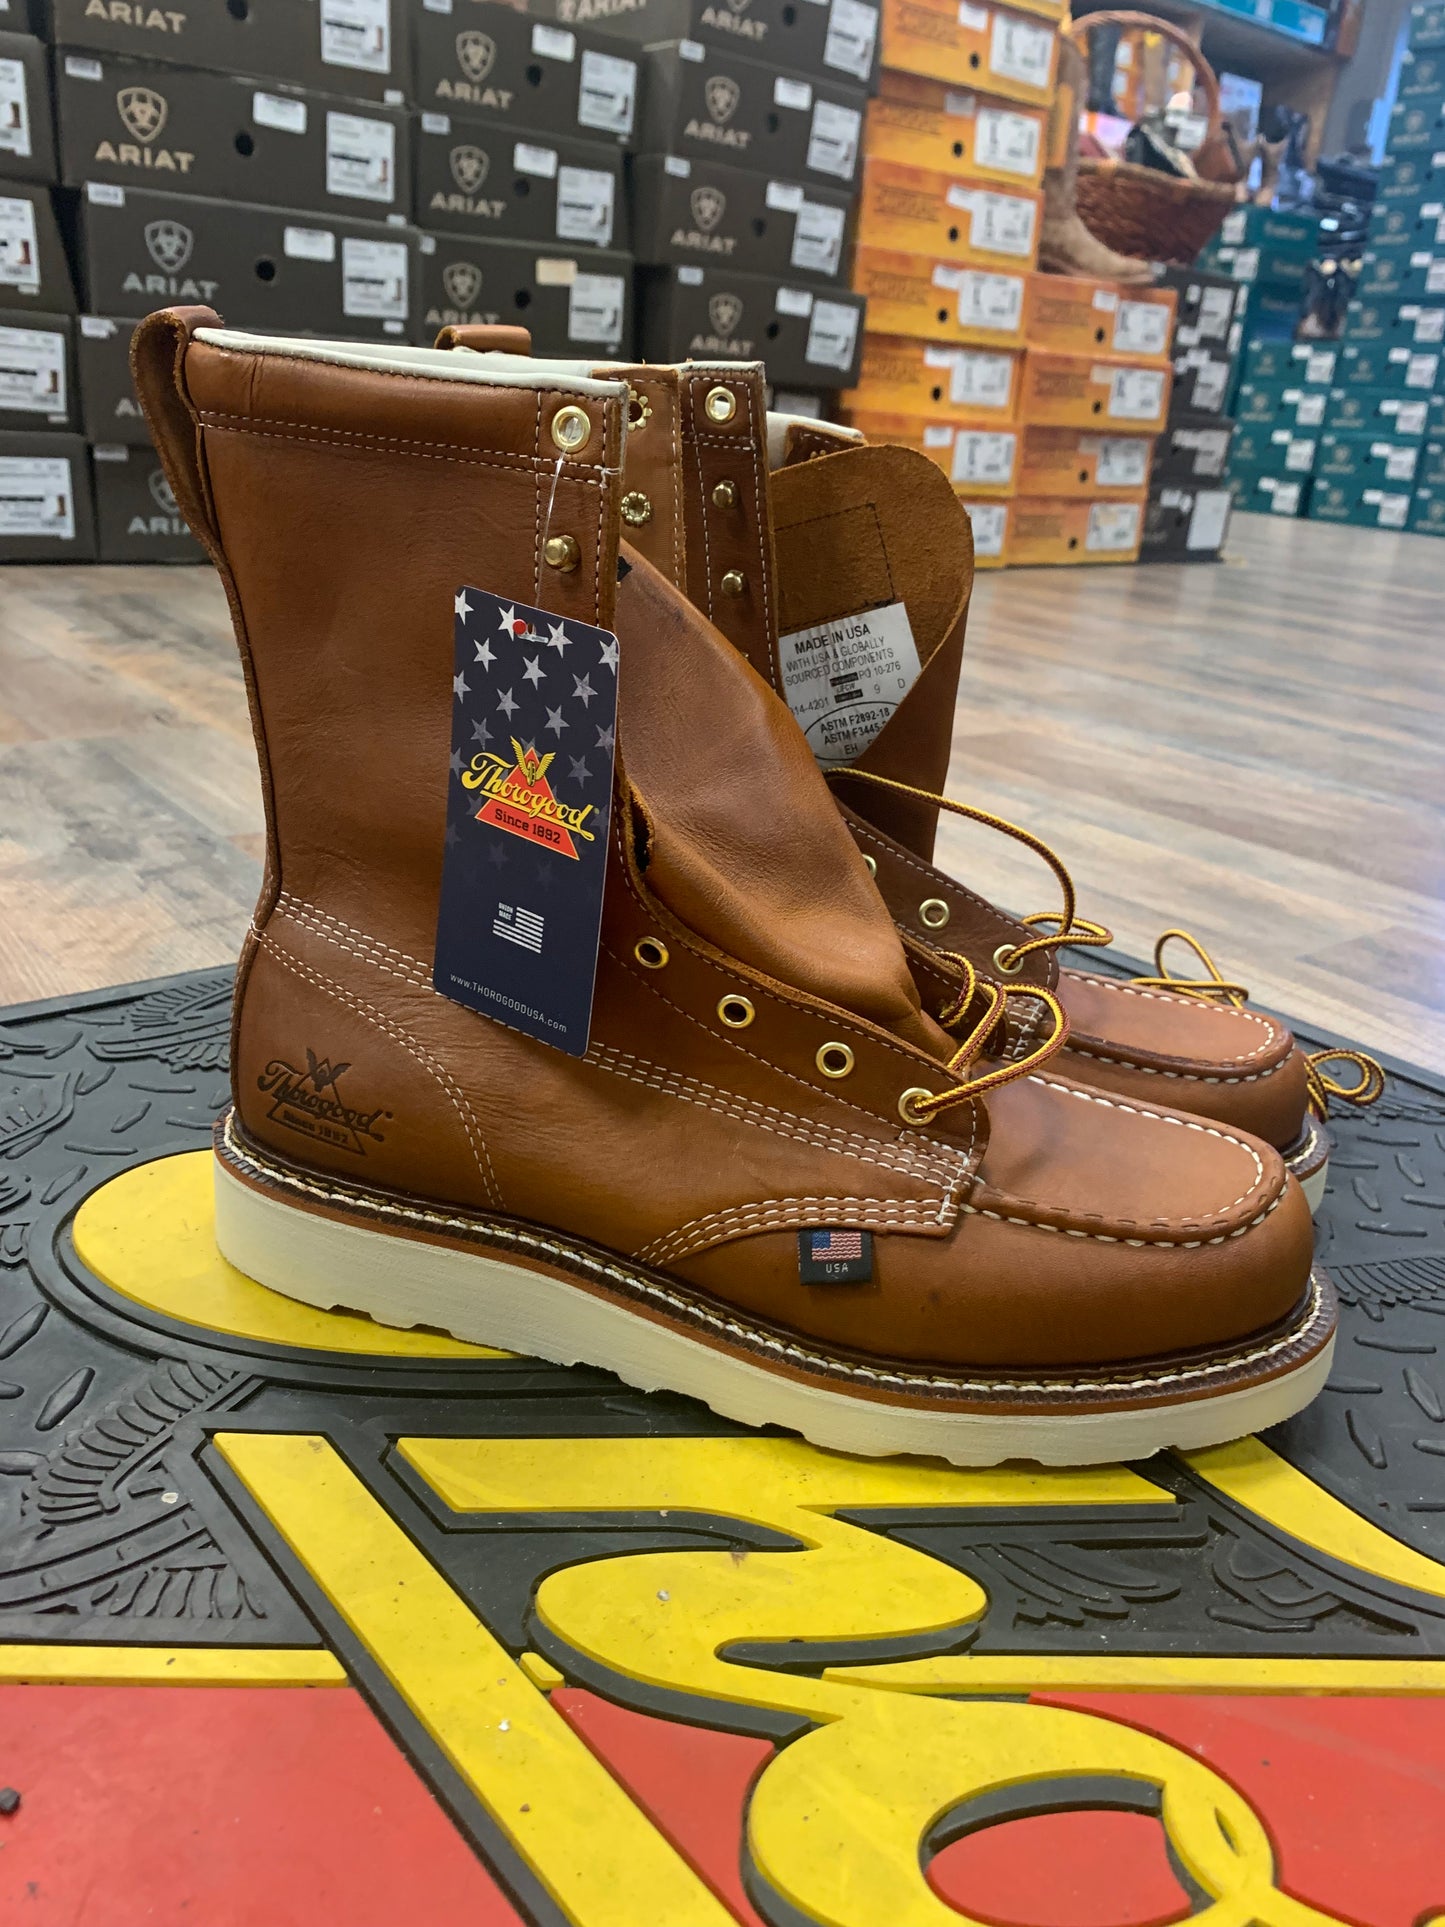 Men's 8" Thorogood Work Boots (U.S.A.) 814-4201